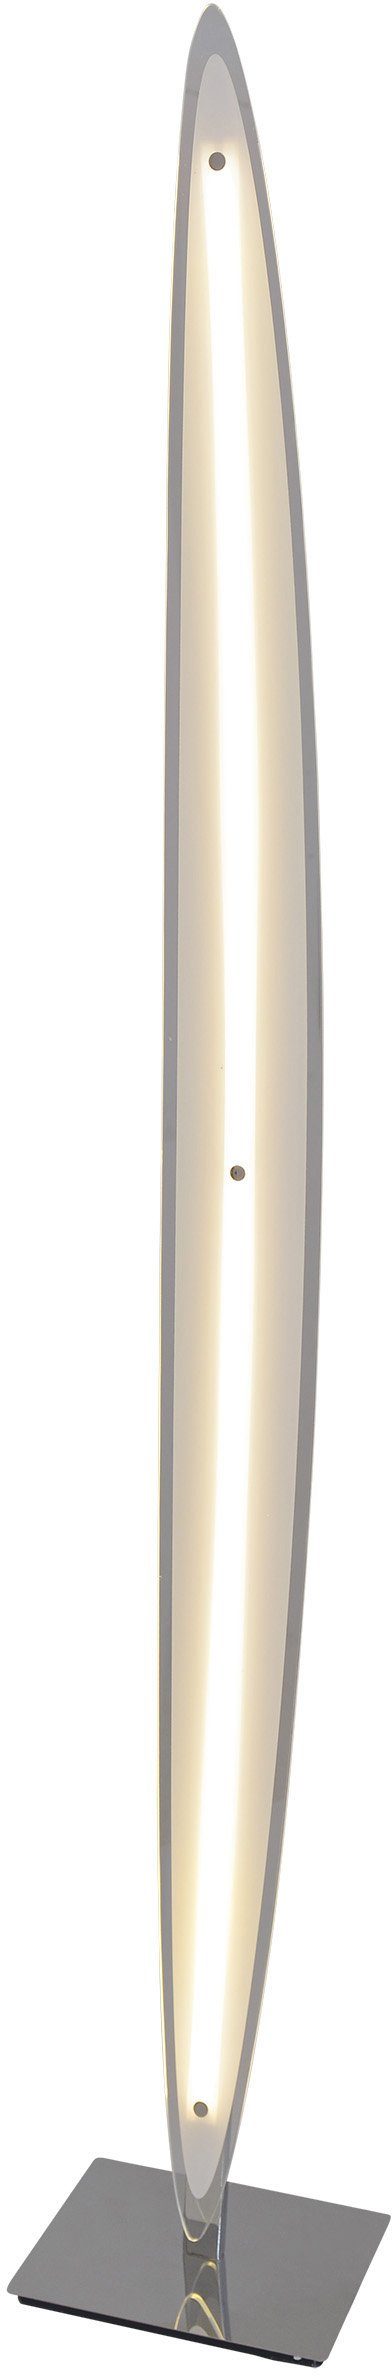 näve LED Stehlampe Surf, 144 fest LED total inkl. "Surf",dimmbar, LED´s 29W Dimmfunktion, Stehleuchte Warmweiß, 1850lm integriert, 3000K